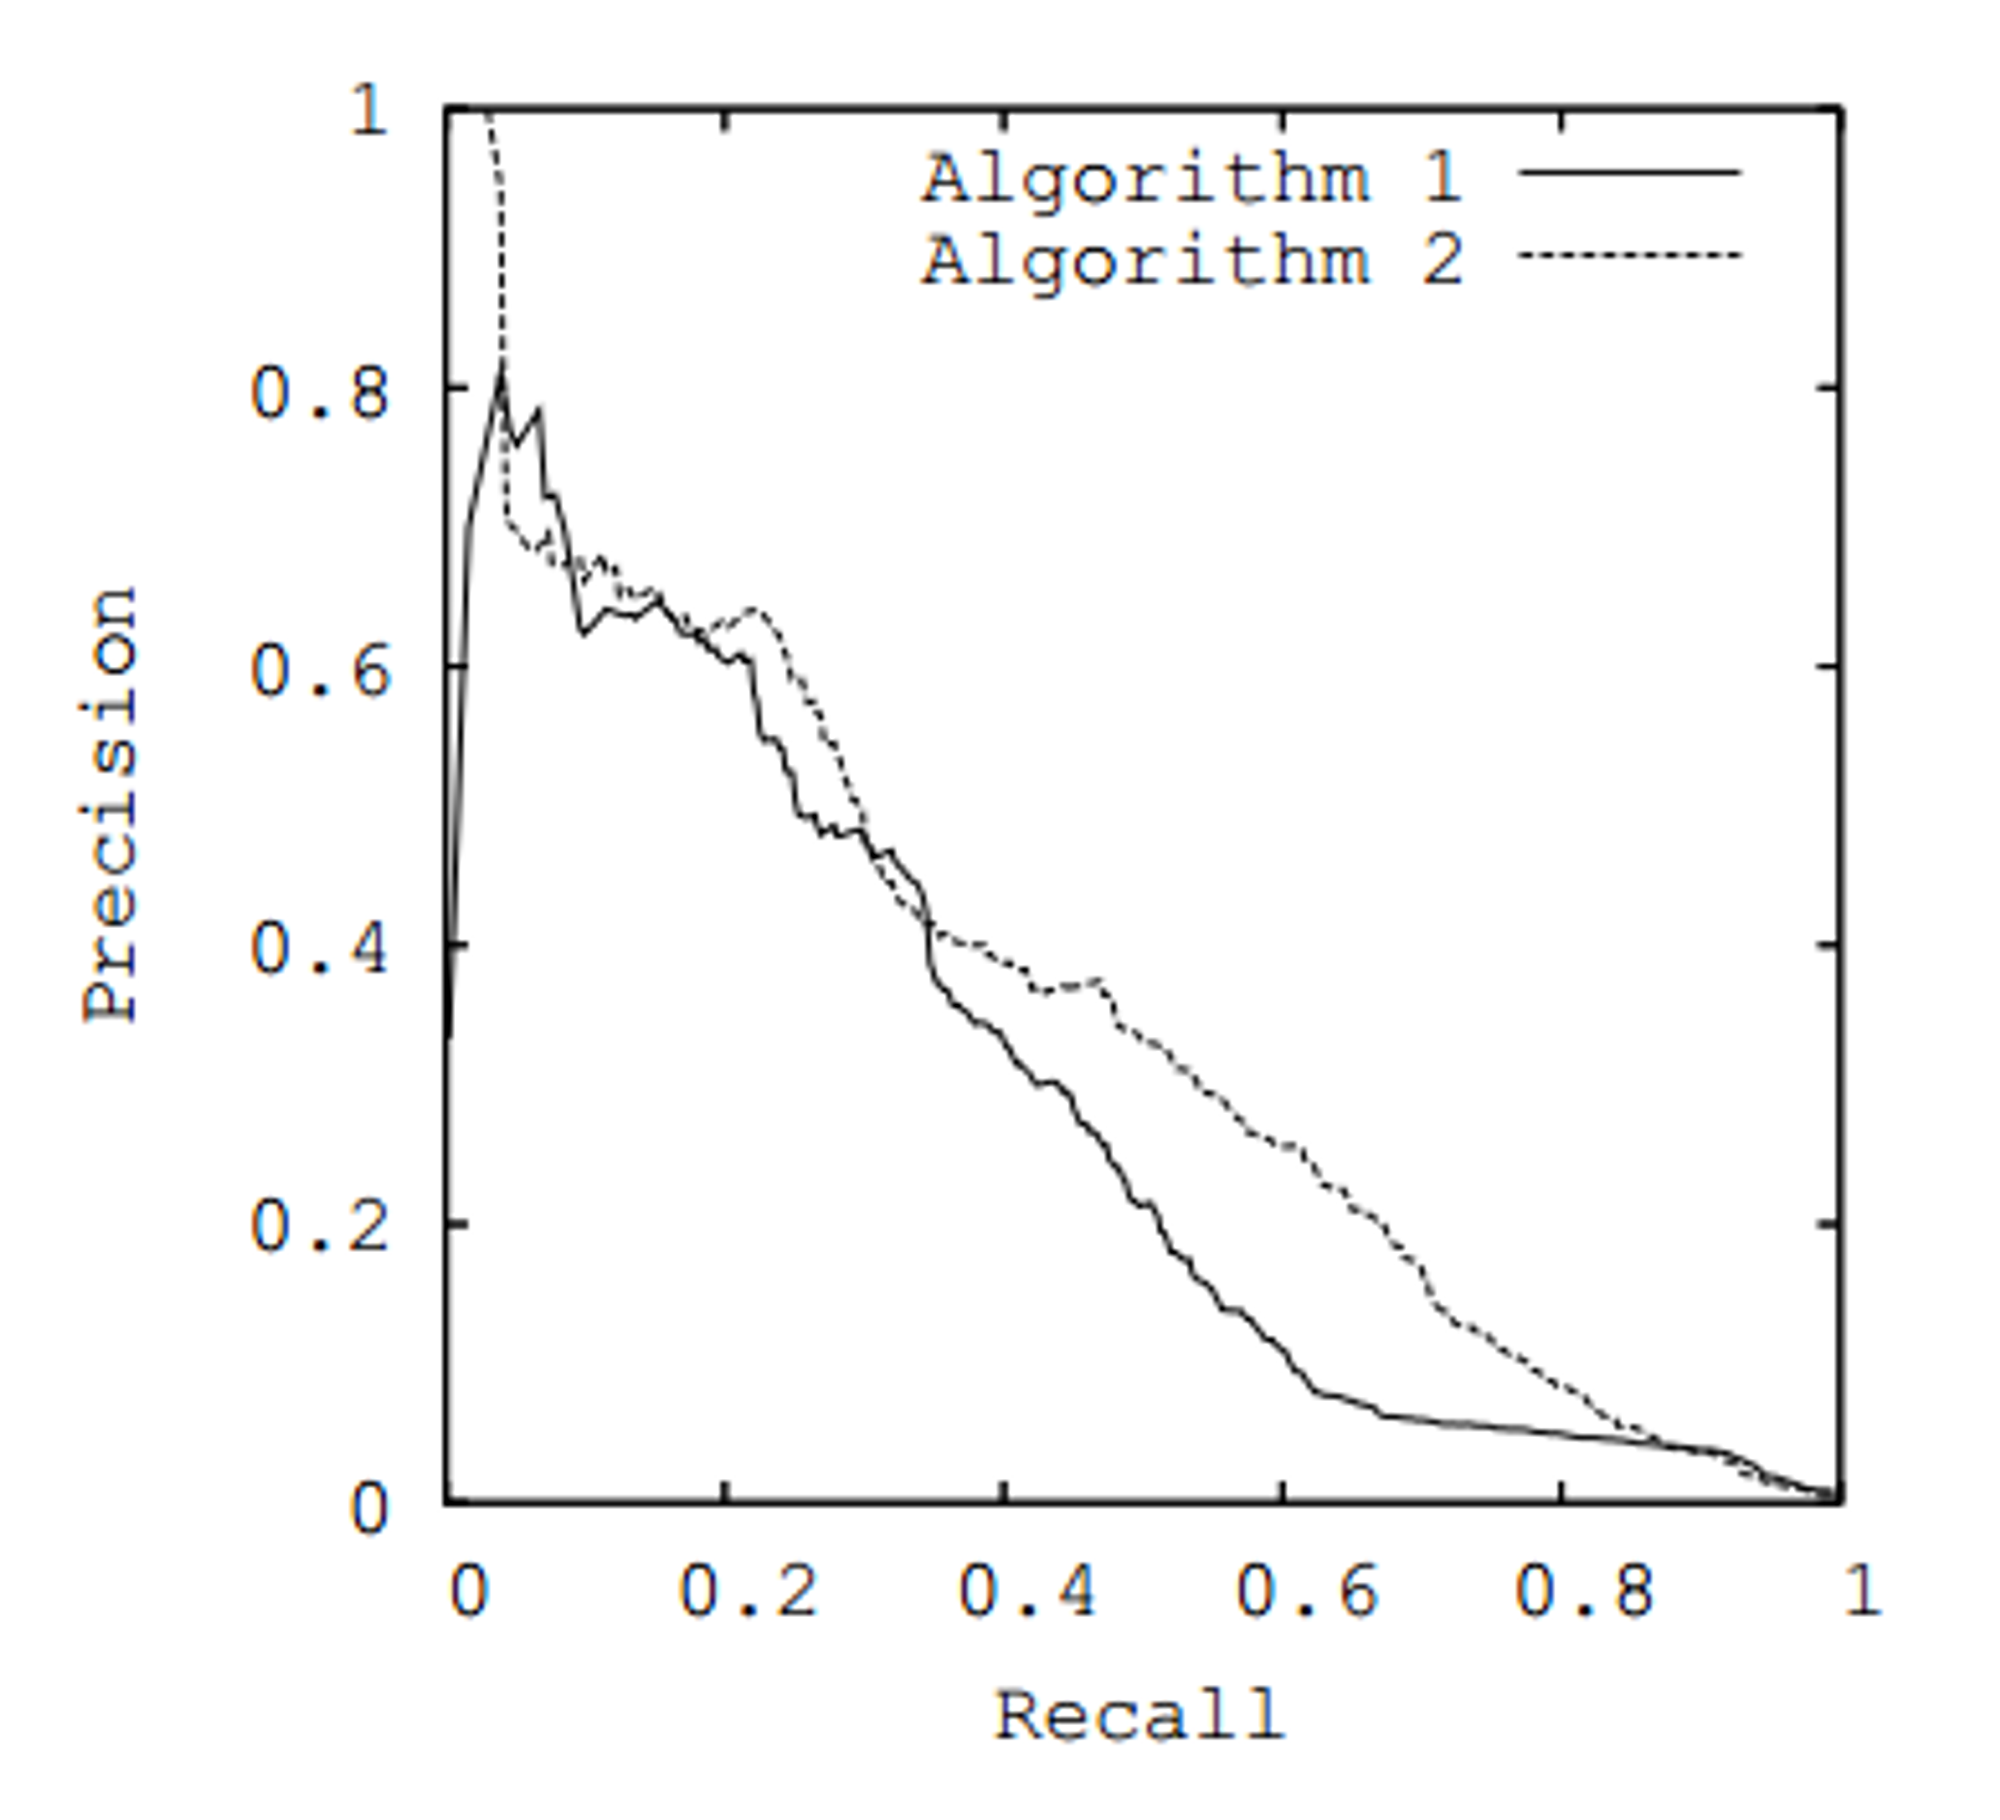 Area under precision-recall curve